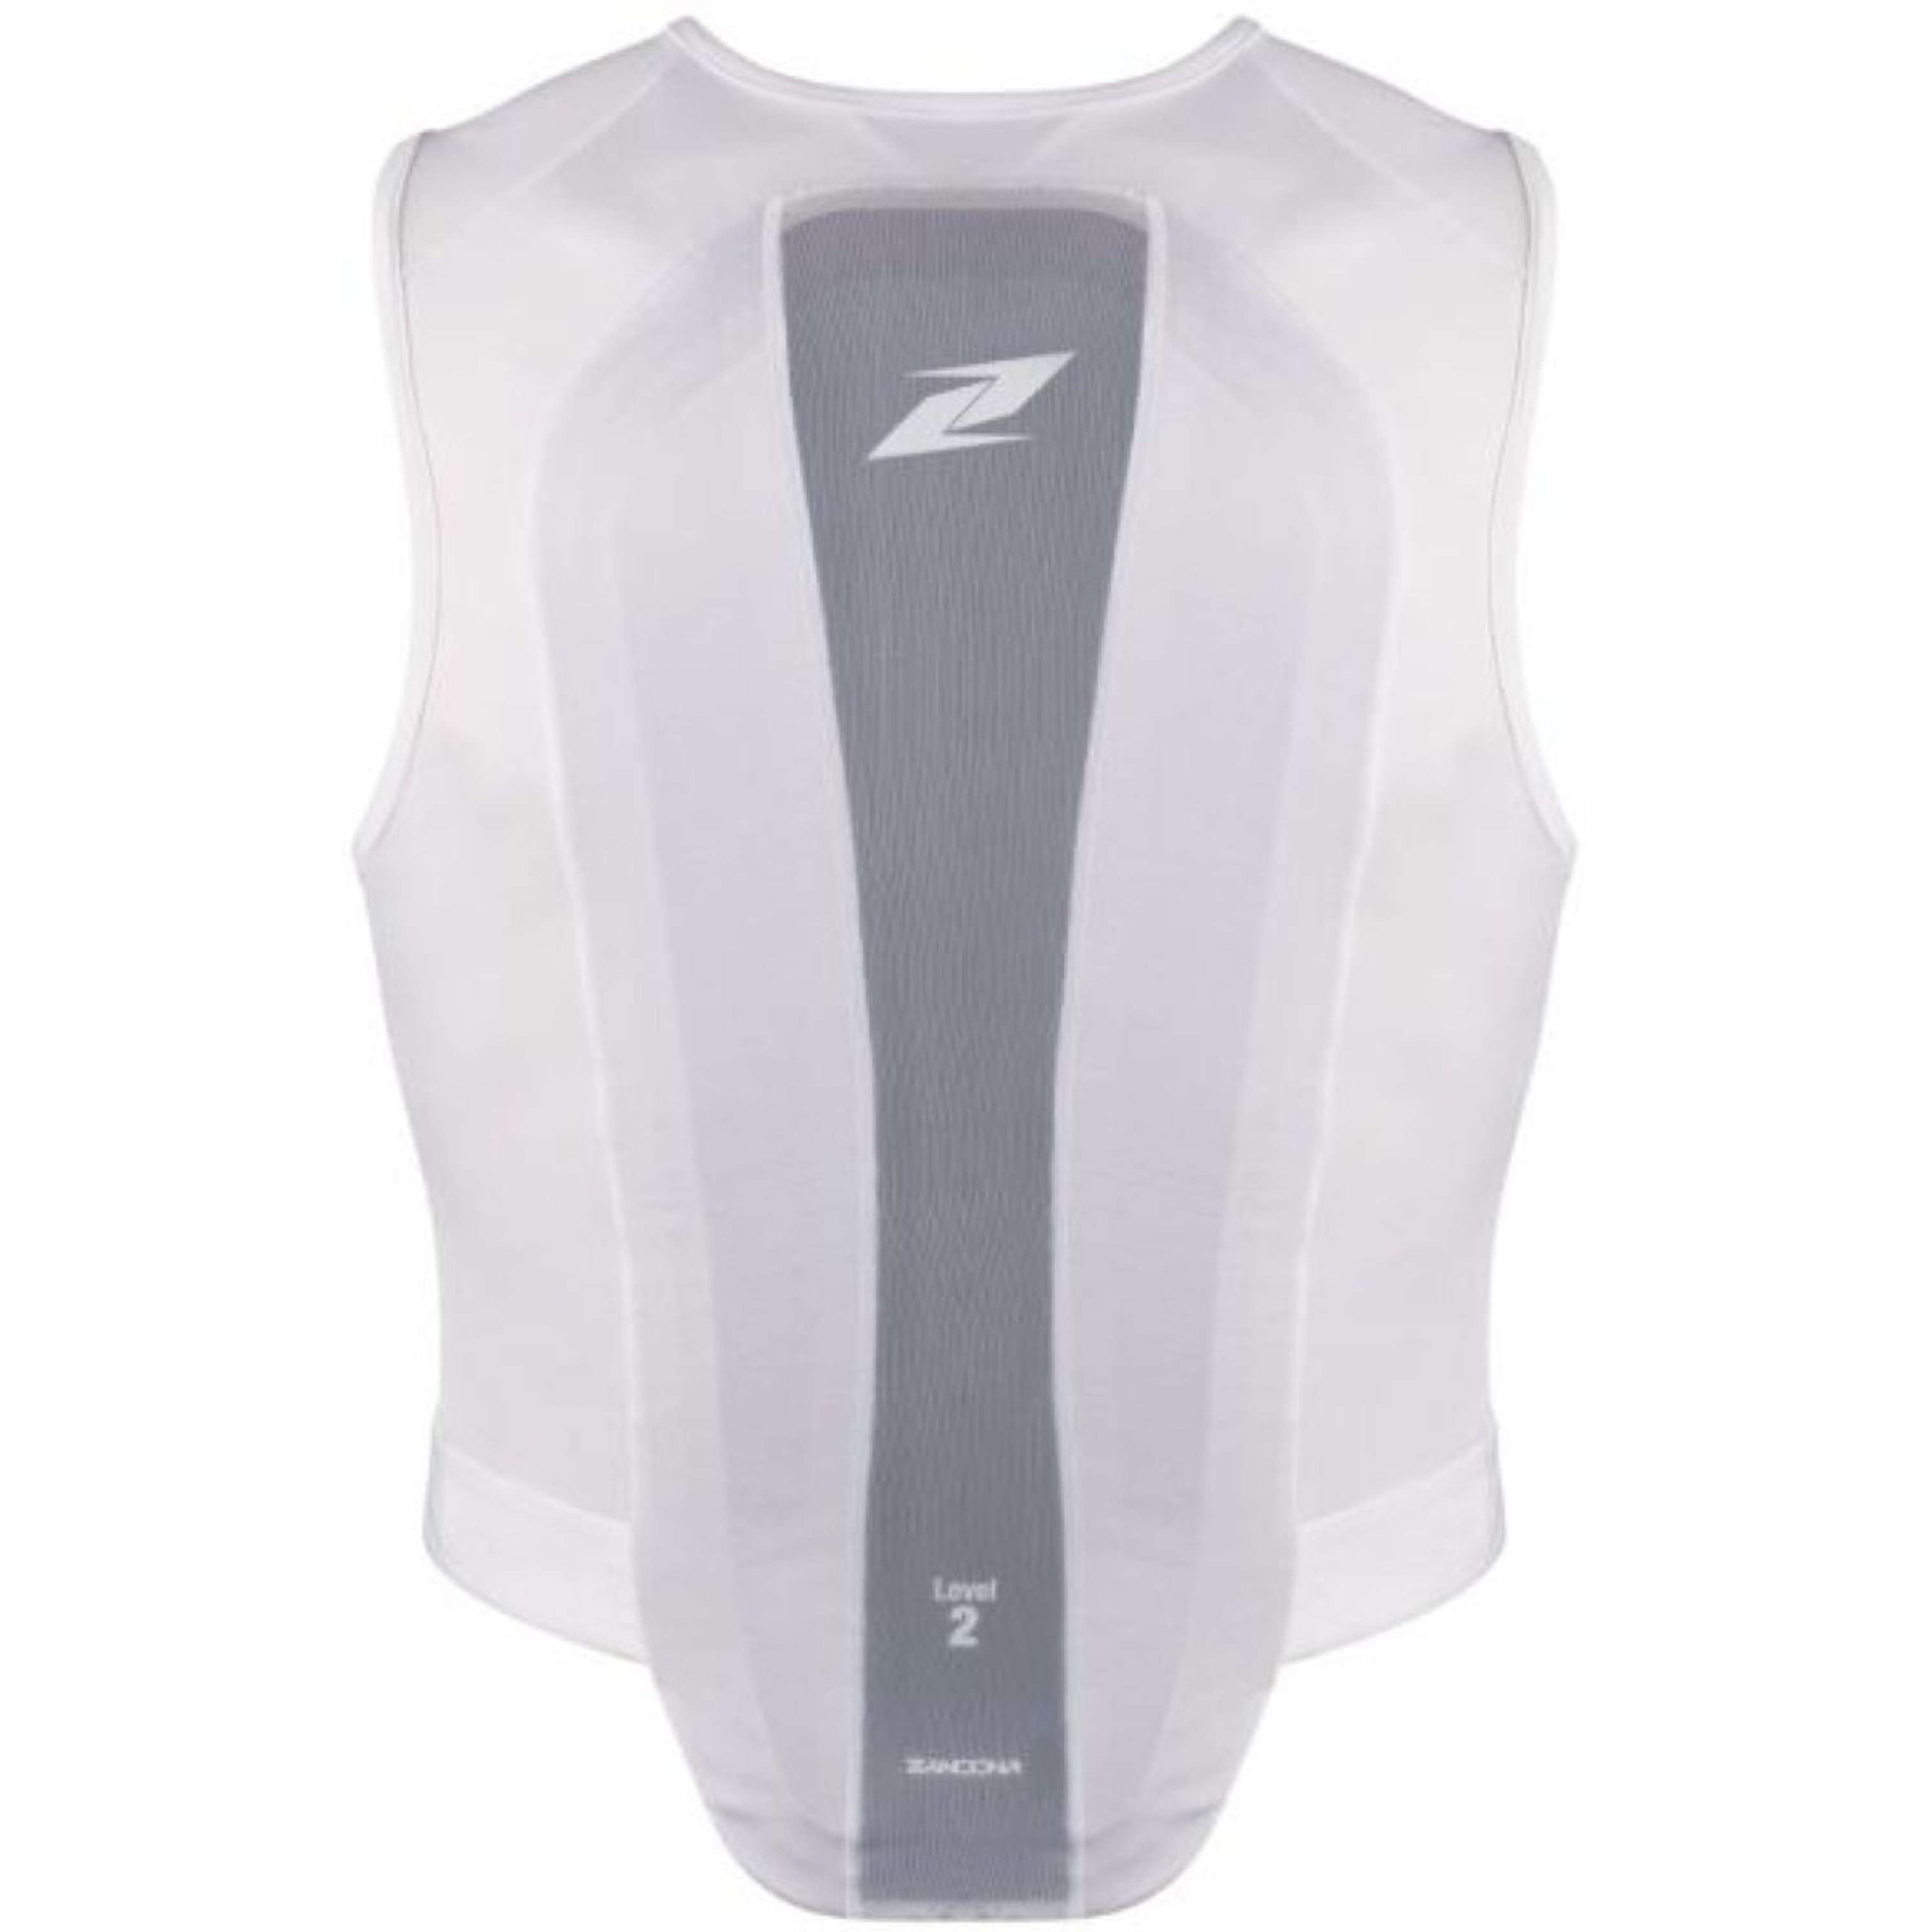 Zandona Competition Vest x7 Blanc